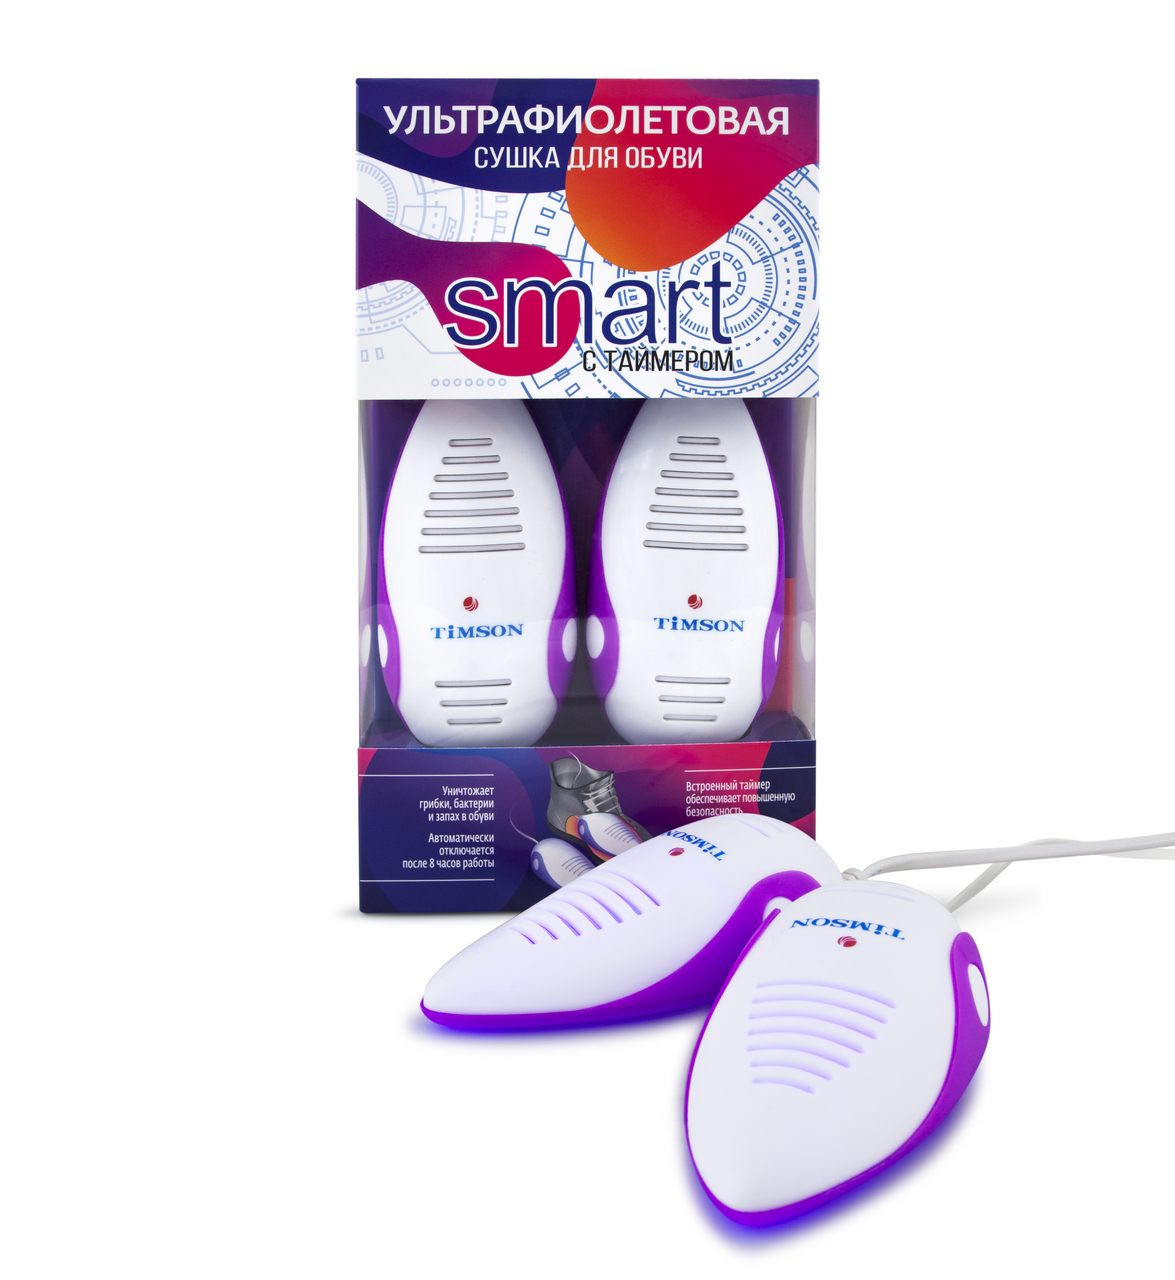 Сушилка для обуви Timson Smart ультрафиолетовая, 15.5 х 4.5 х 27см .